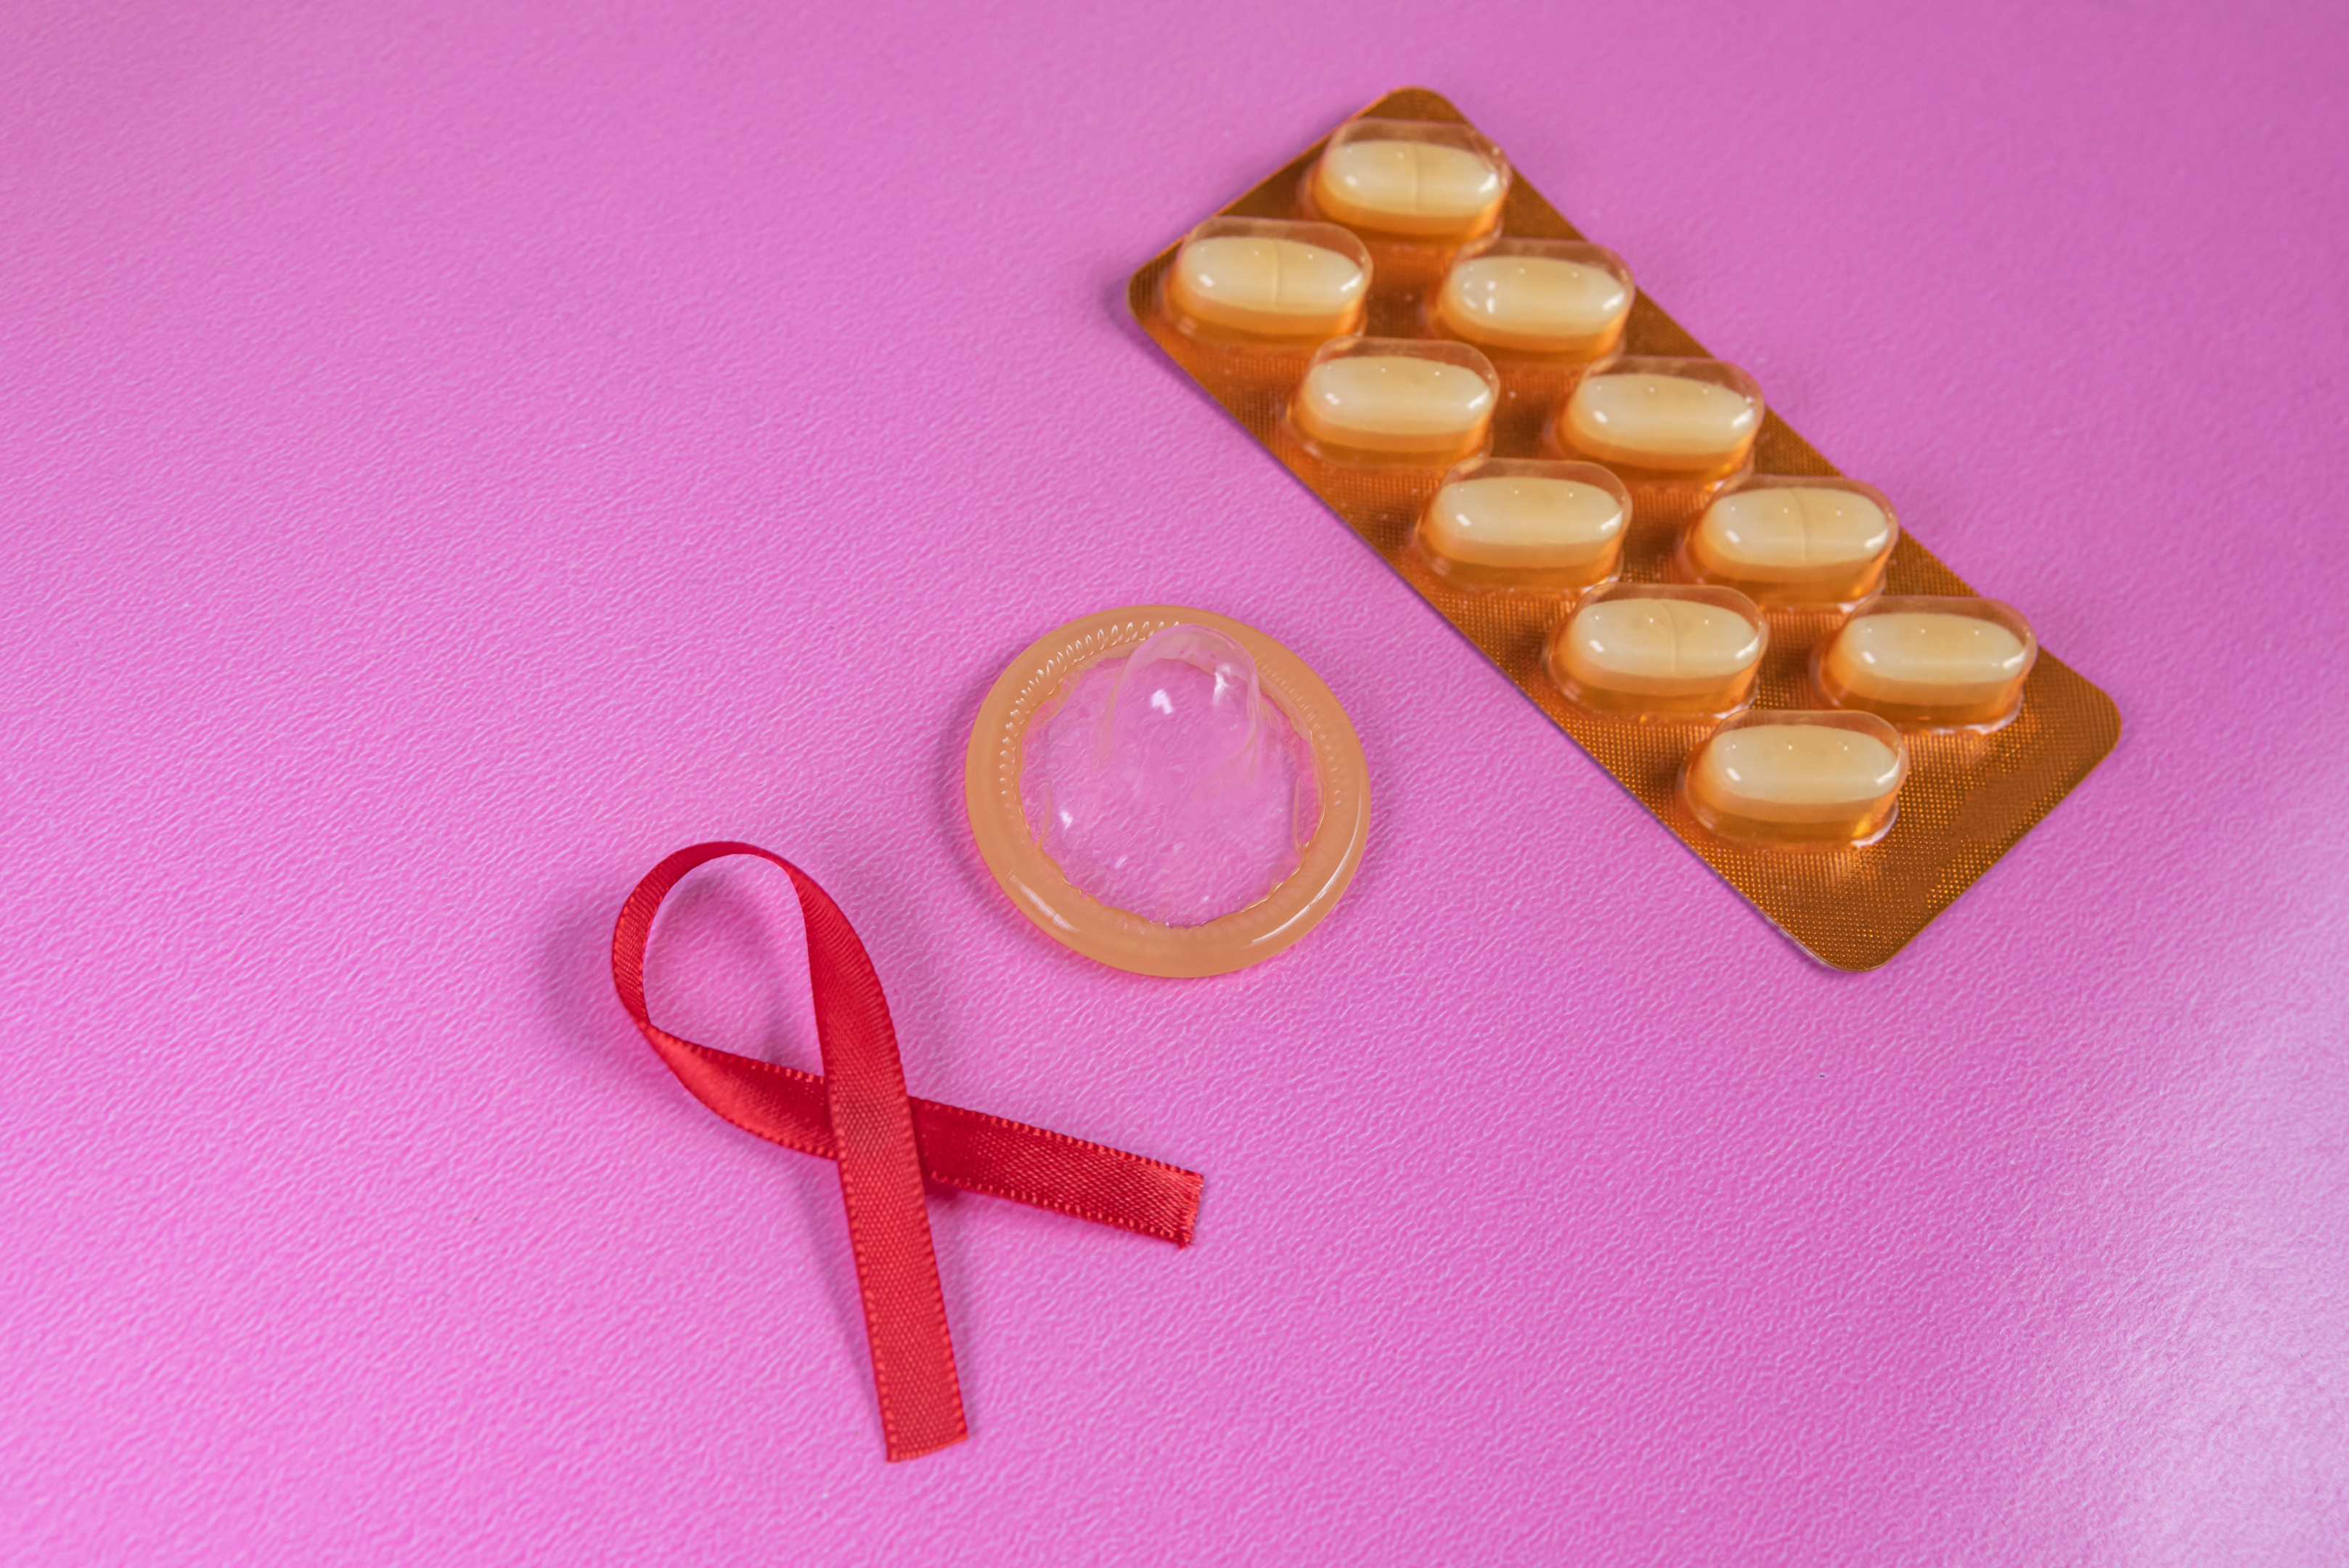 Benefits of alternative contraceptives